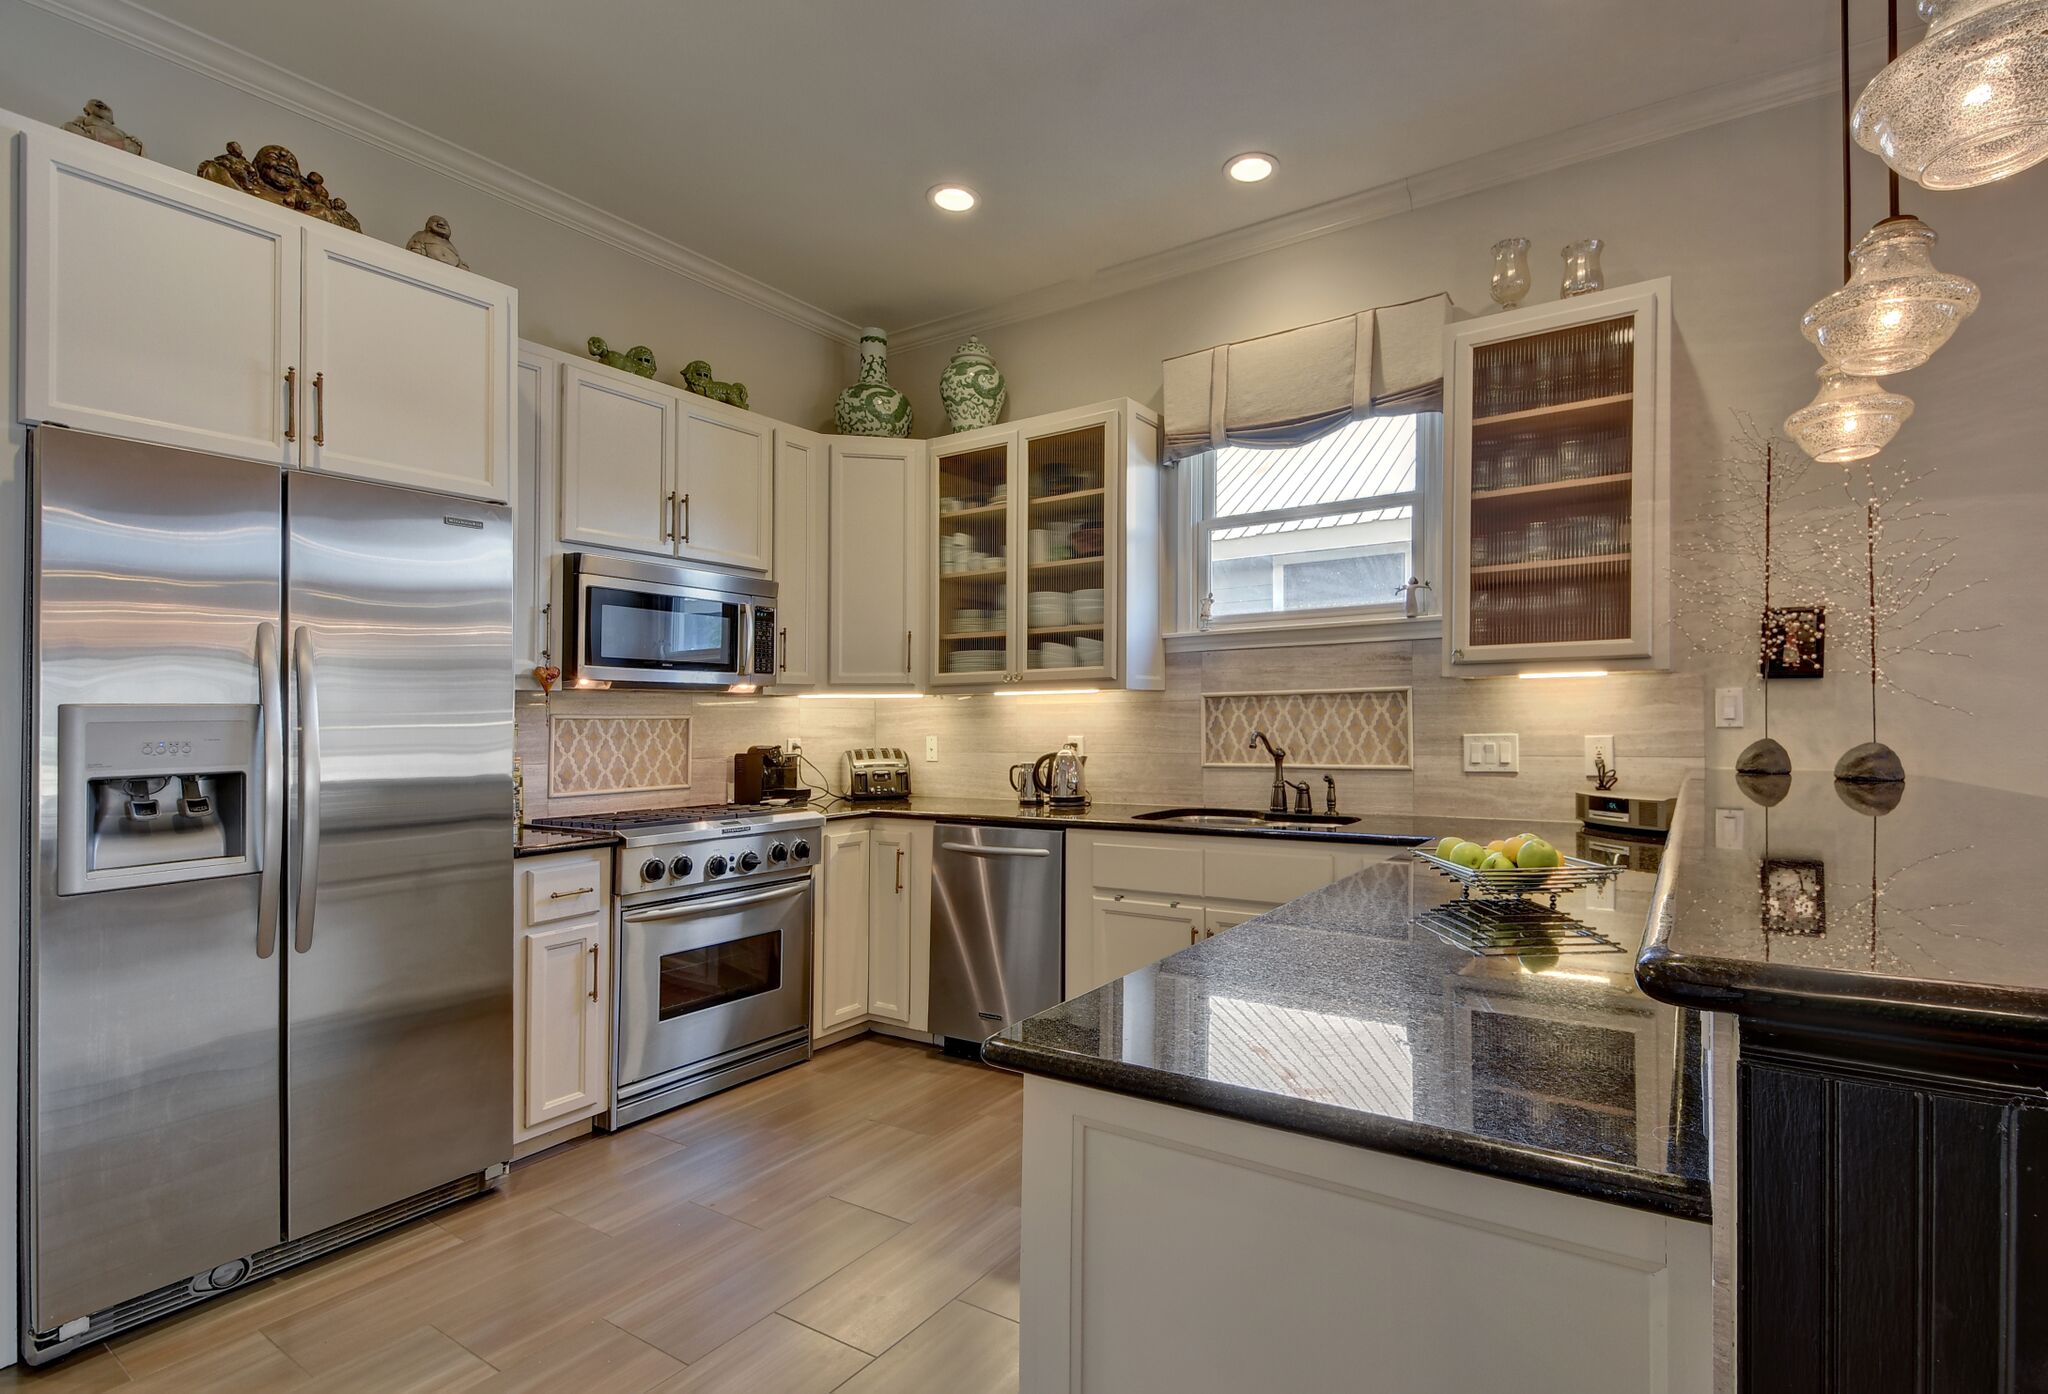 White kitchen with decorative backsplash